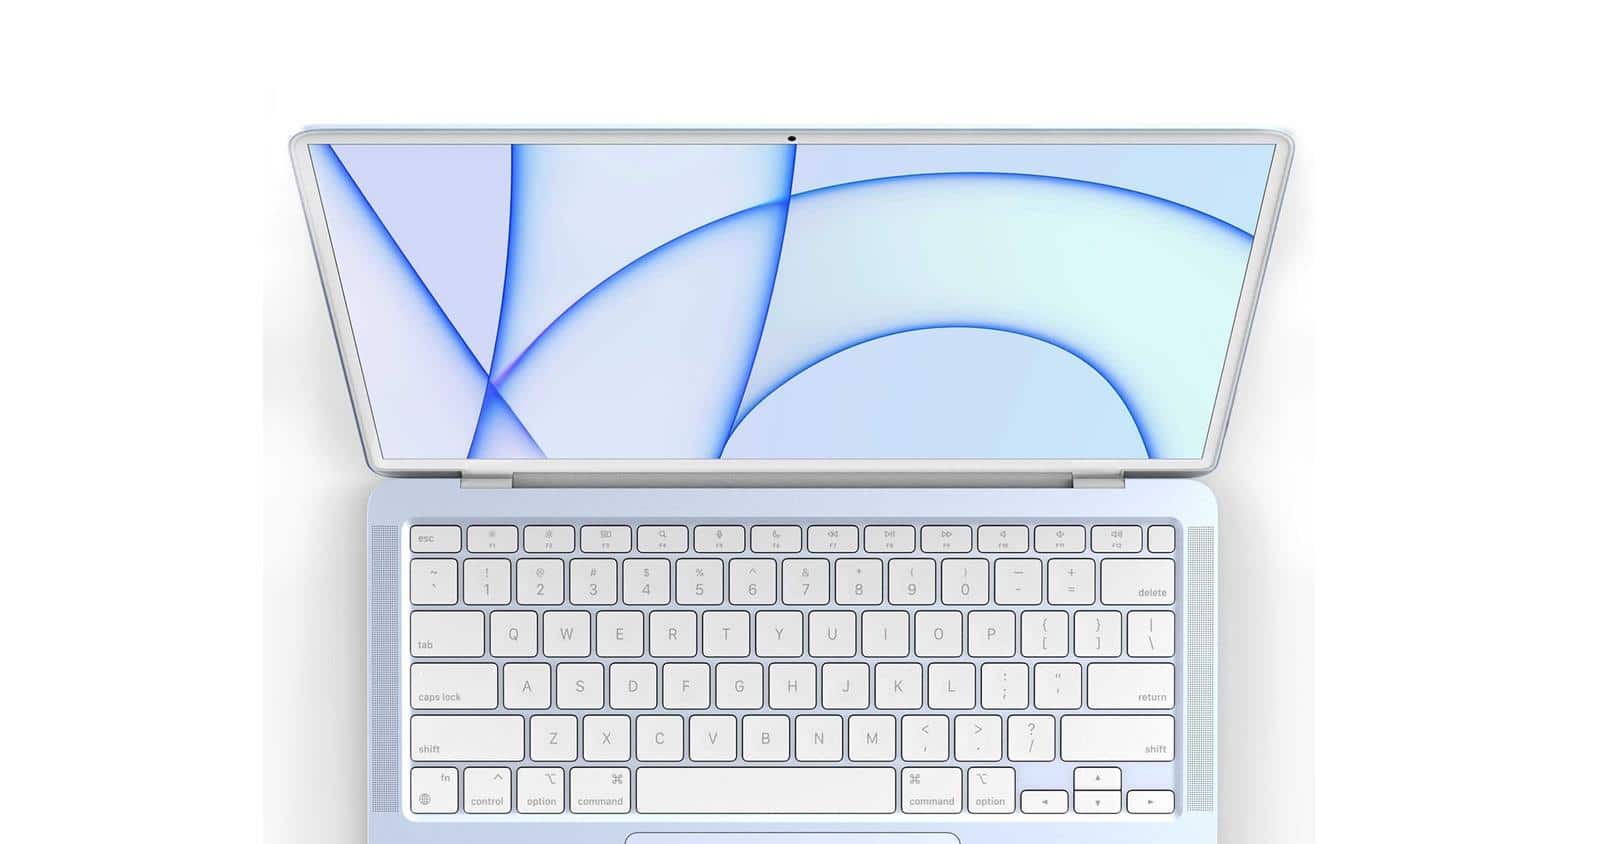 Apple's new MacBook Air display is back in the spotlight